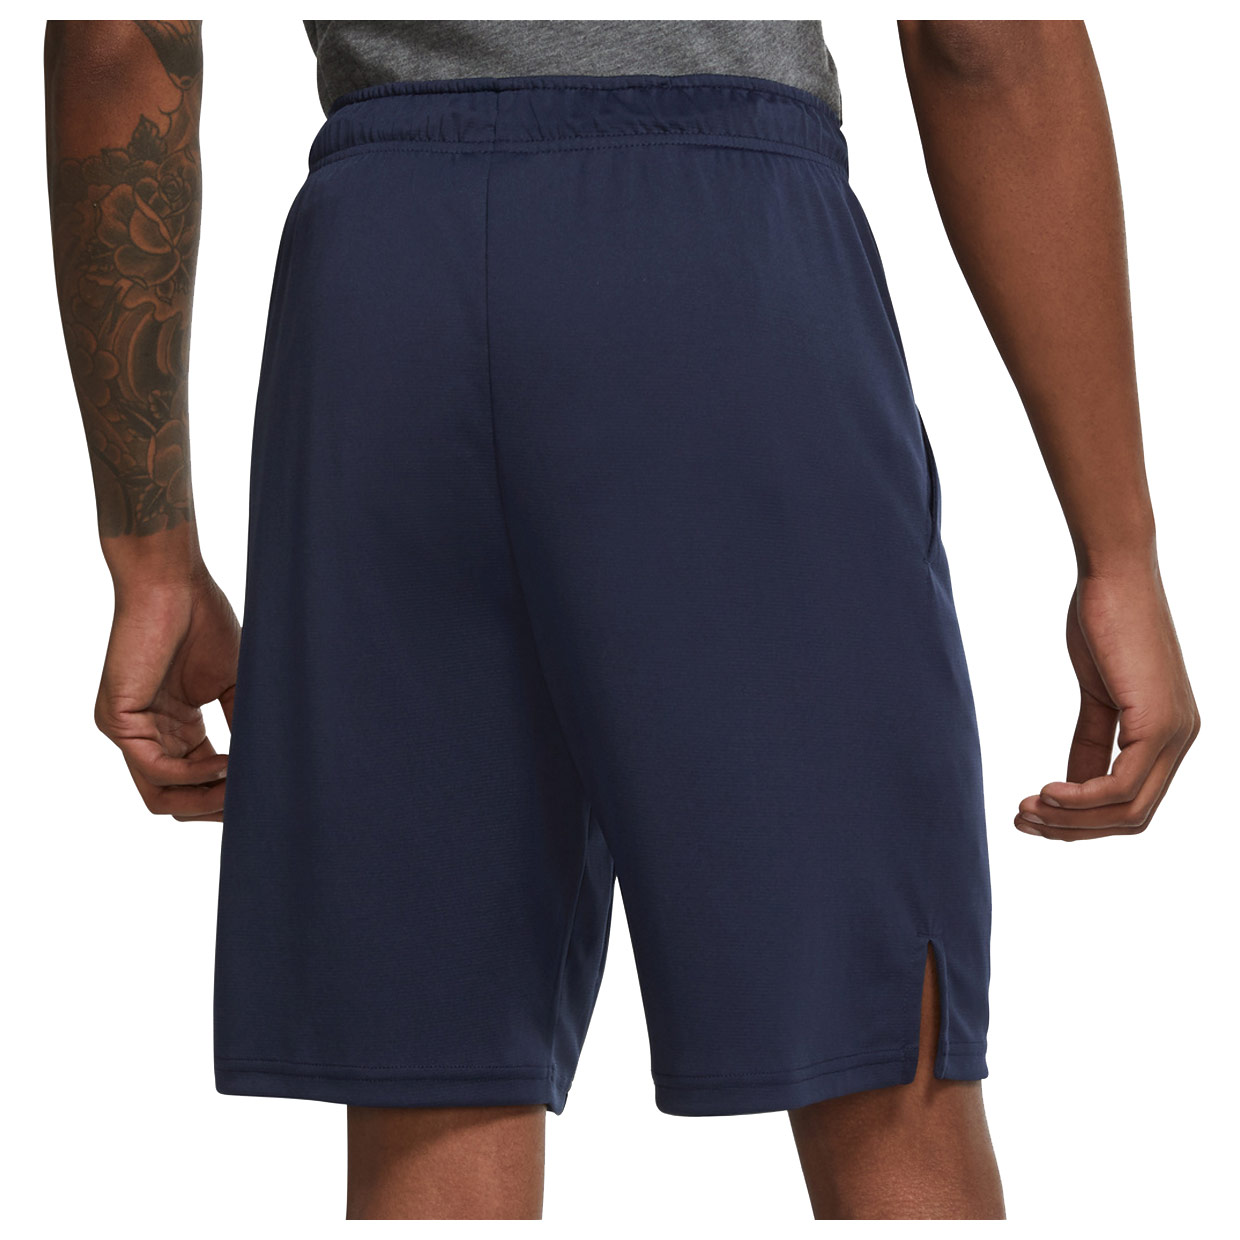 Herren Sporthose Dri-FIT Shorts